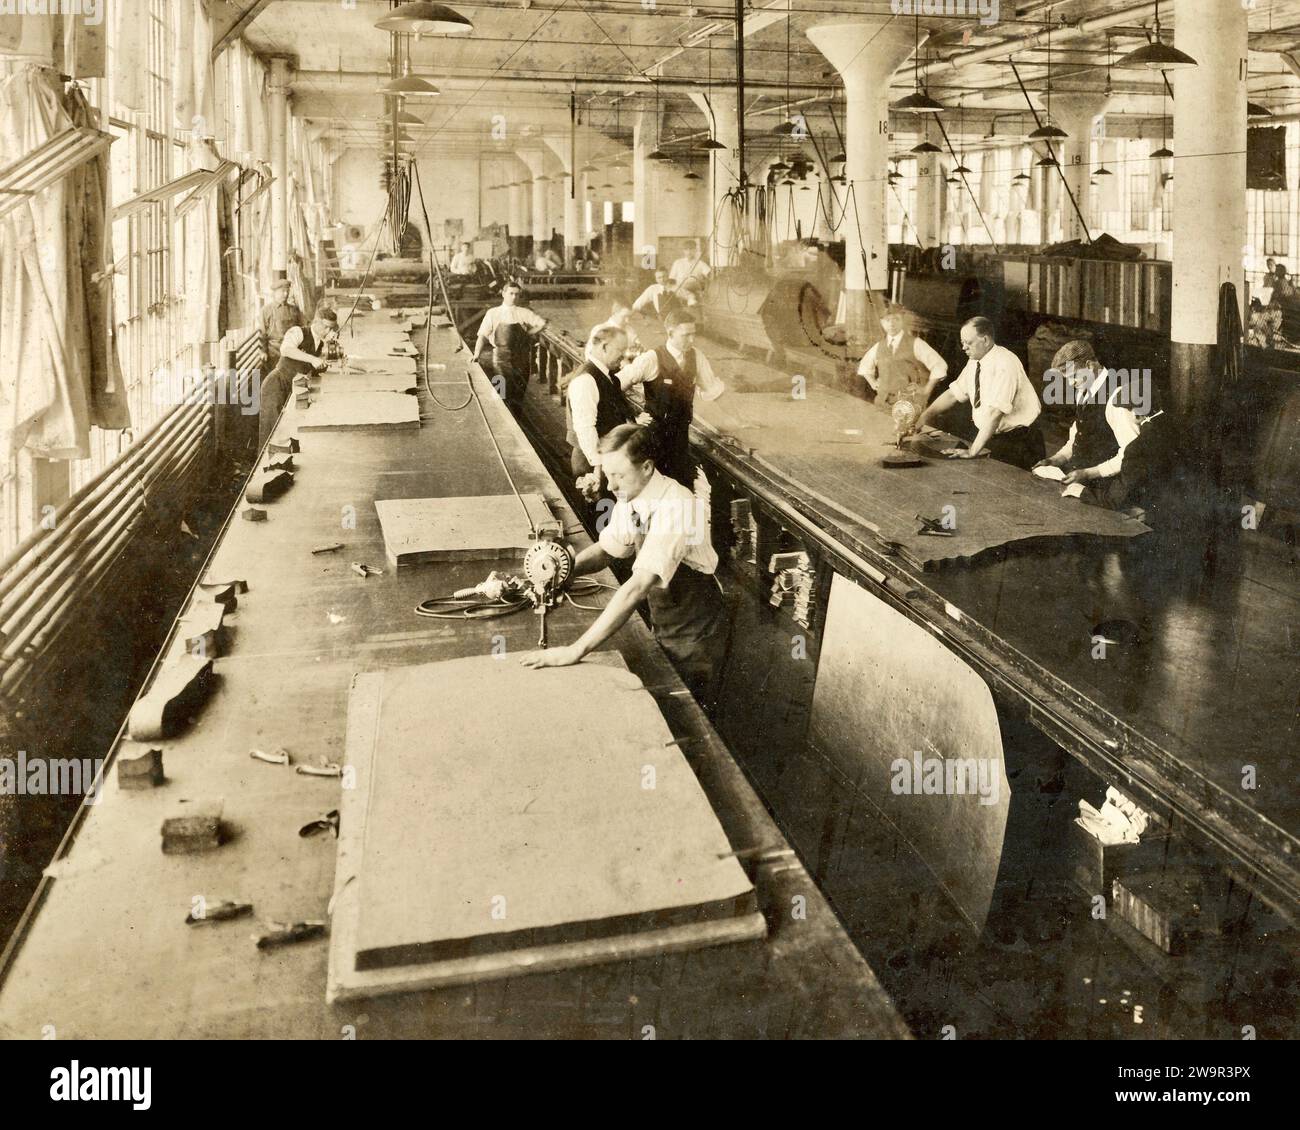 Fabbrica tessile 1900, industria tessile, lavoratori tessili circa 1900 Foto Stock